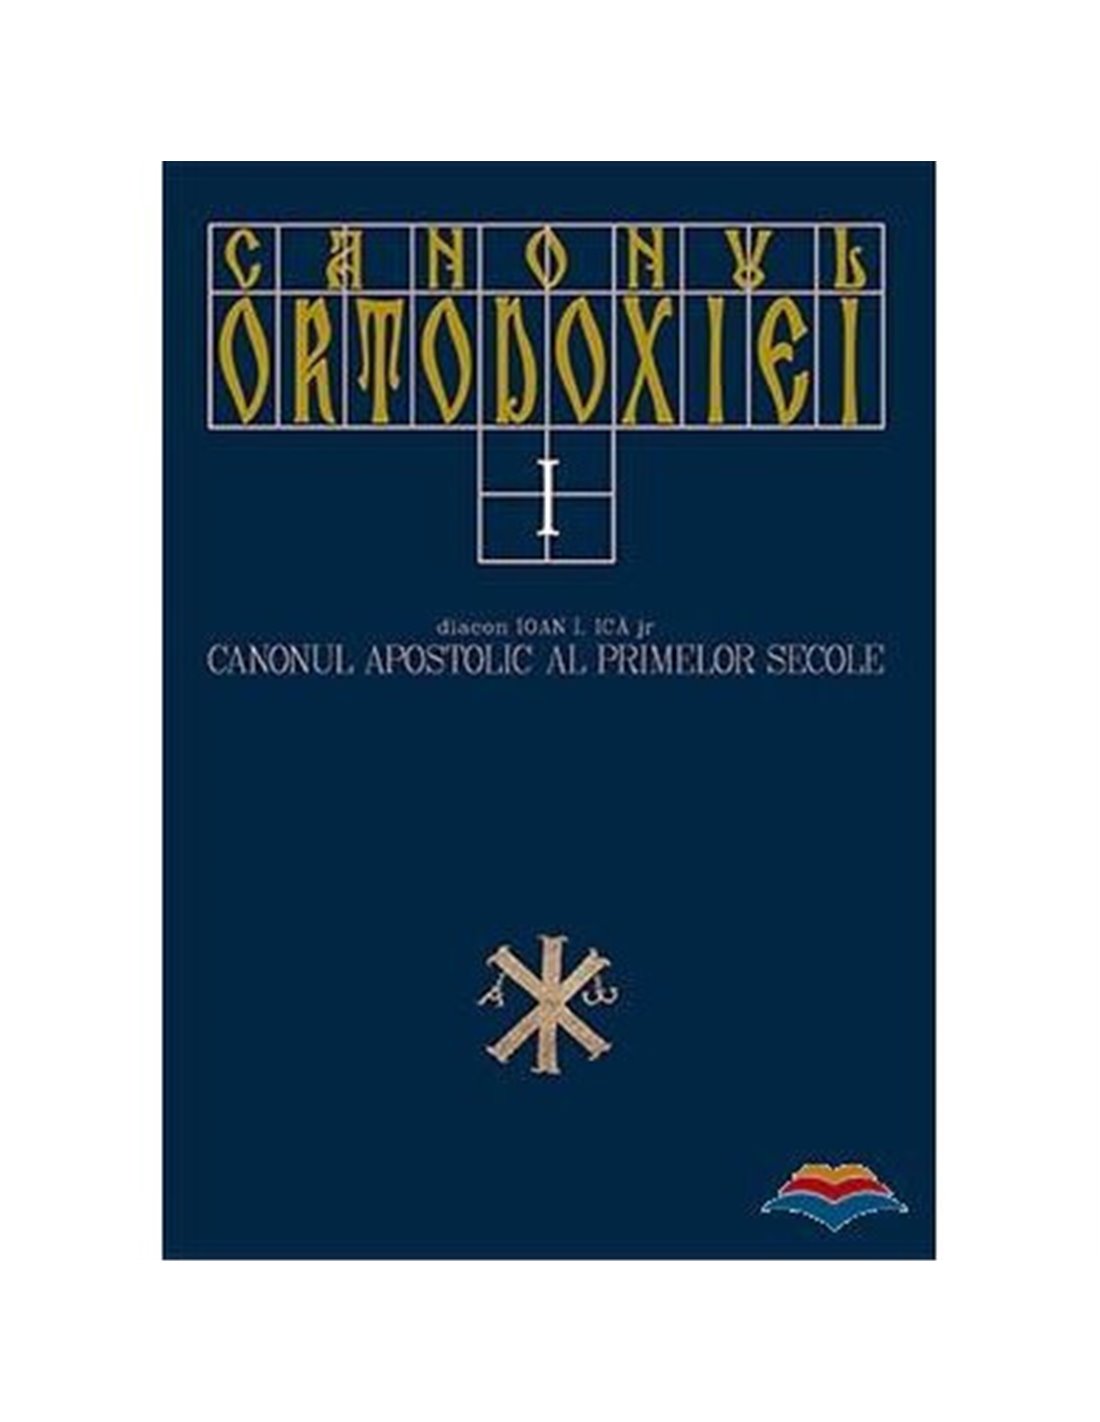 Canonul Ortodoxiei. vol. 1 - Ioan I. Ica jr. | Editura Deisis